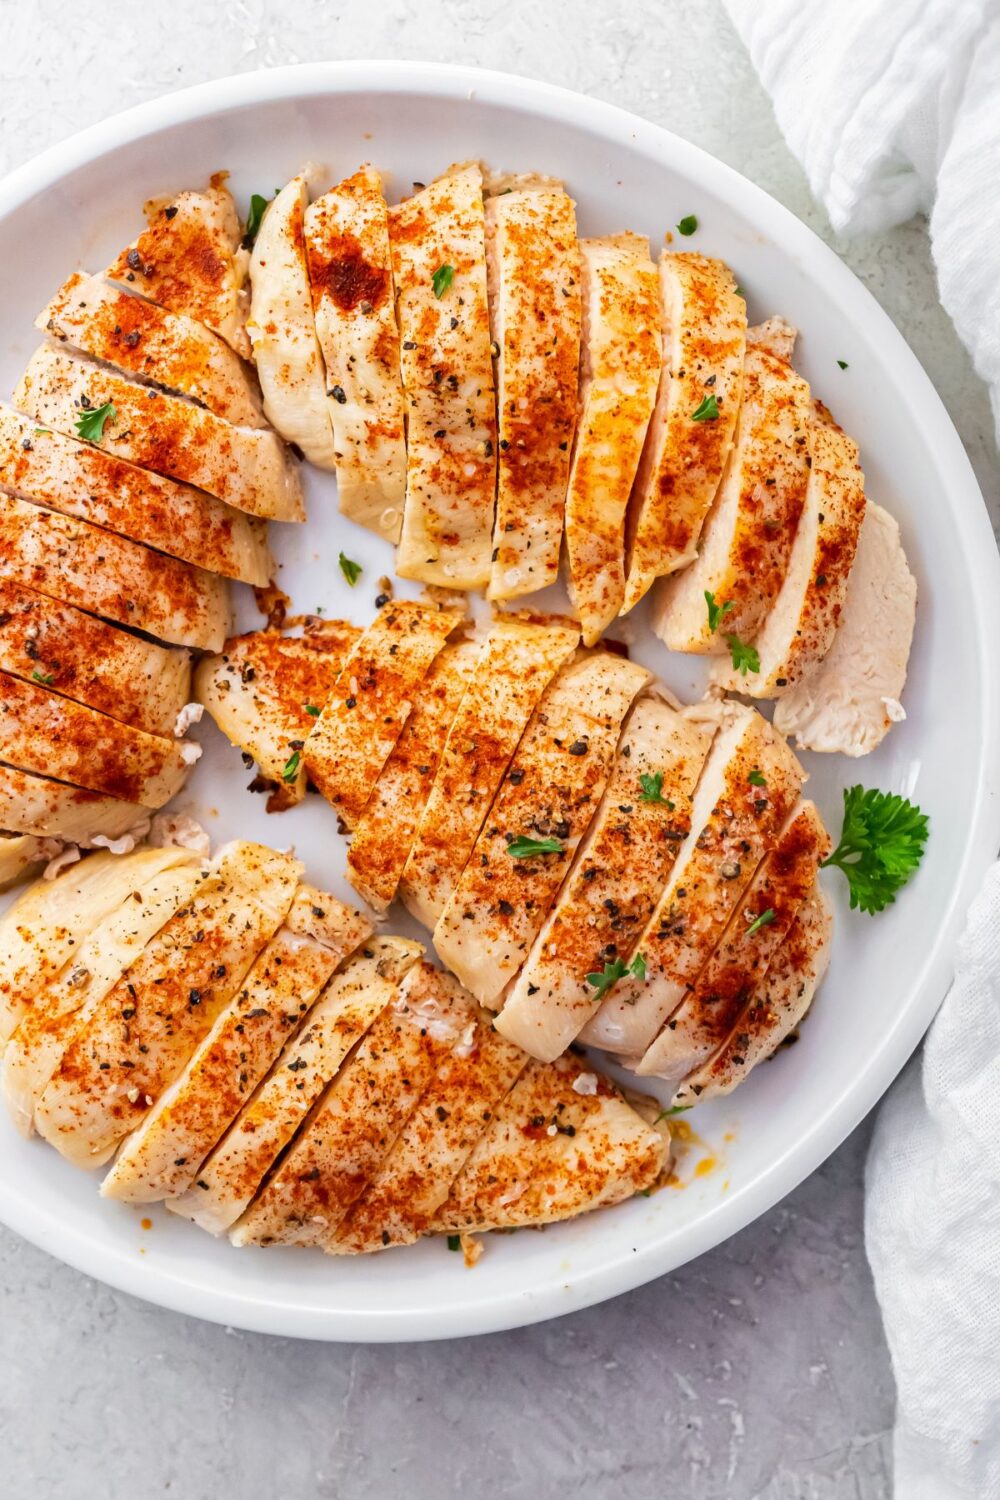 Calories in 4 oz chicken breast